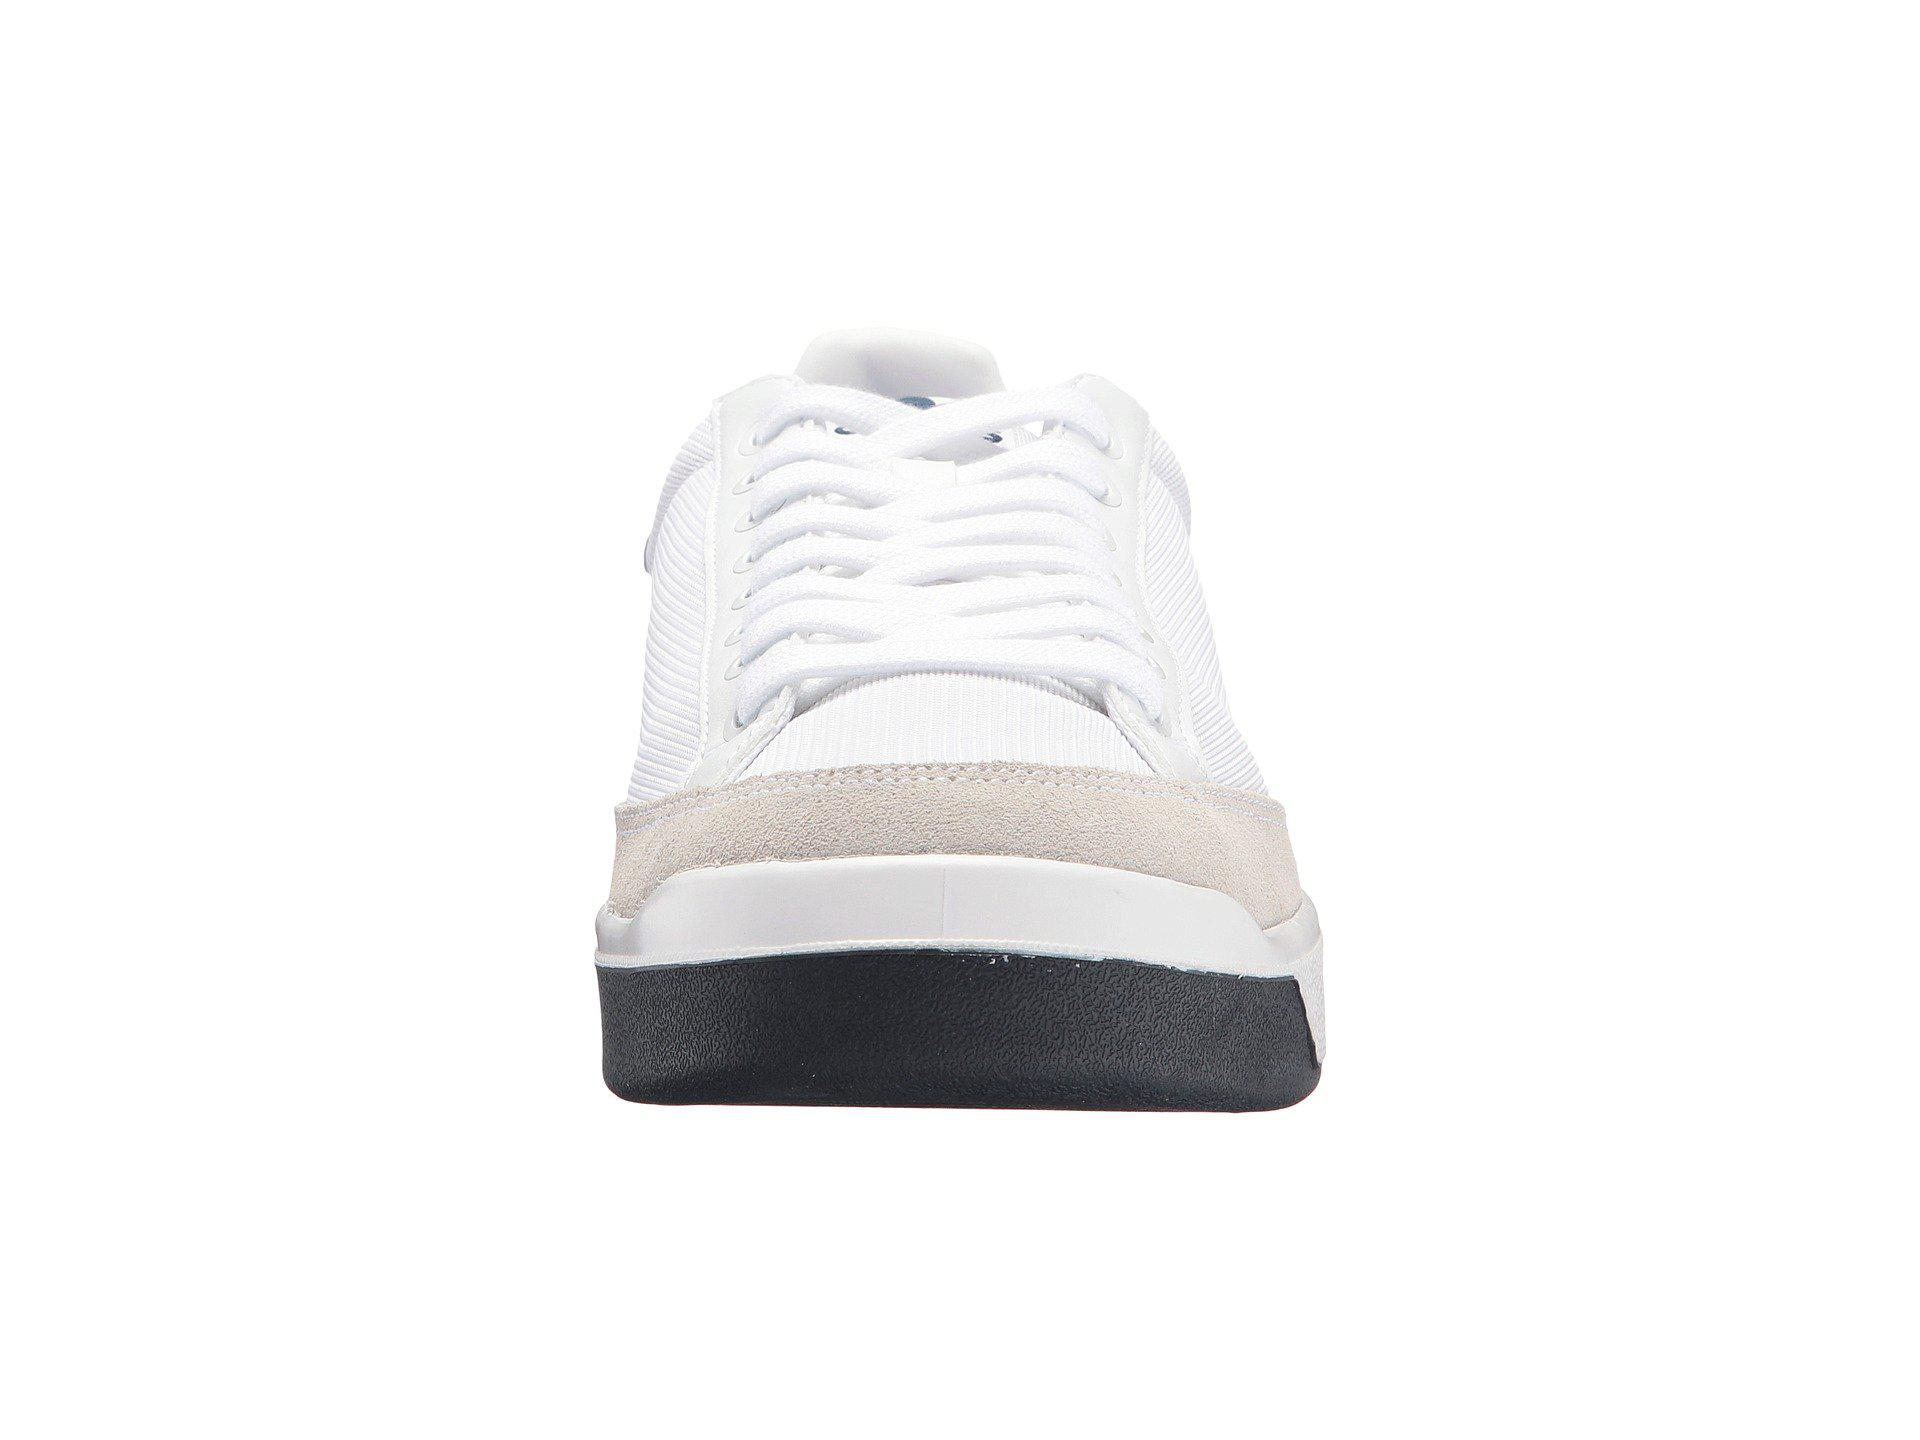 adidas Originals Suede Rod Laver Super (footwear White/footwear  White/collegiate Navy) Men's Tennis Shoes for Men | Lyst